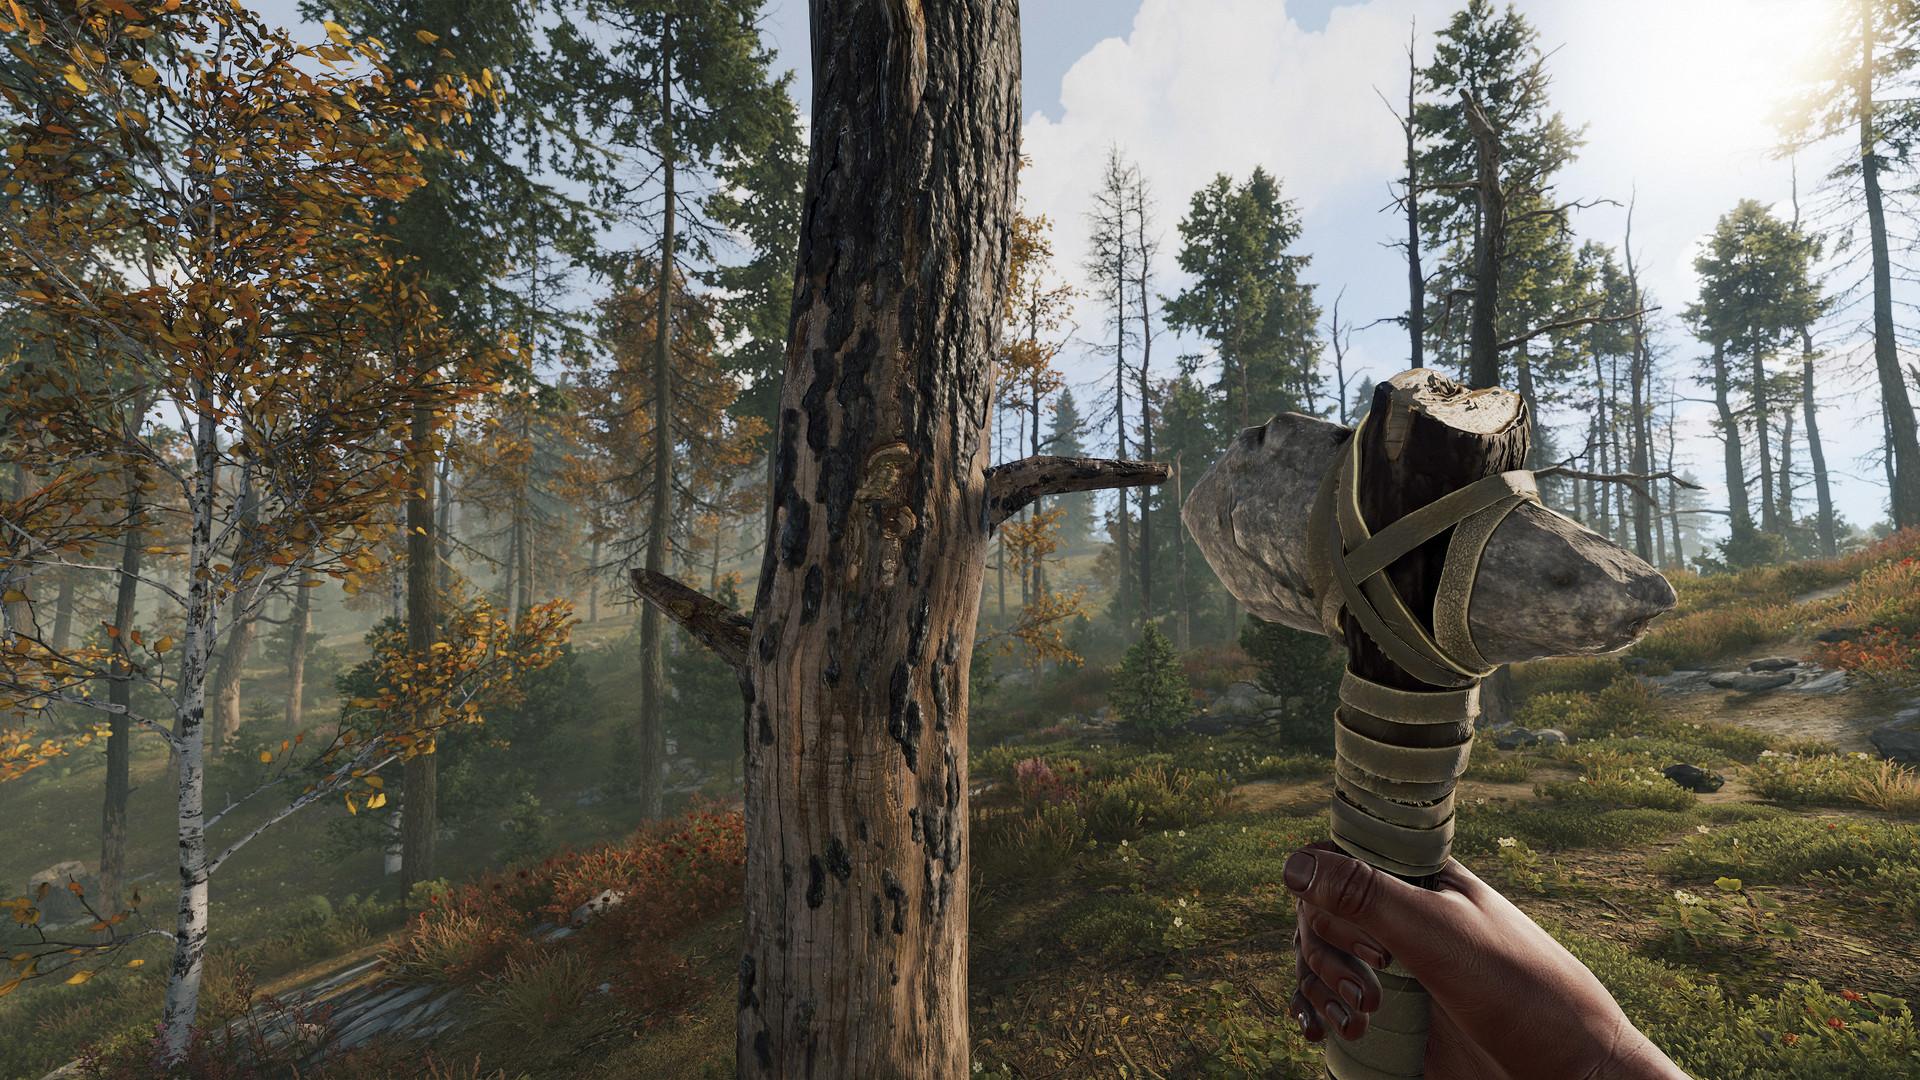 Screenshot №9 from game Rust